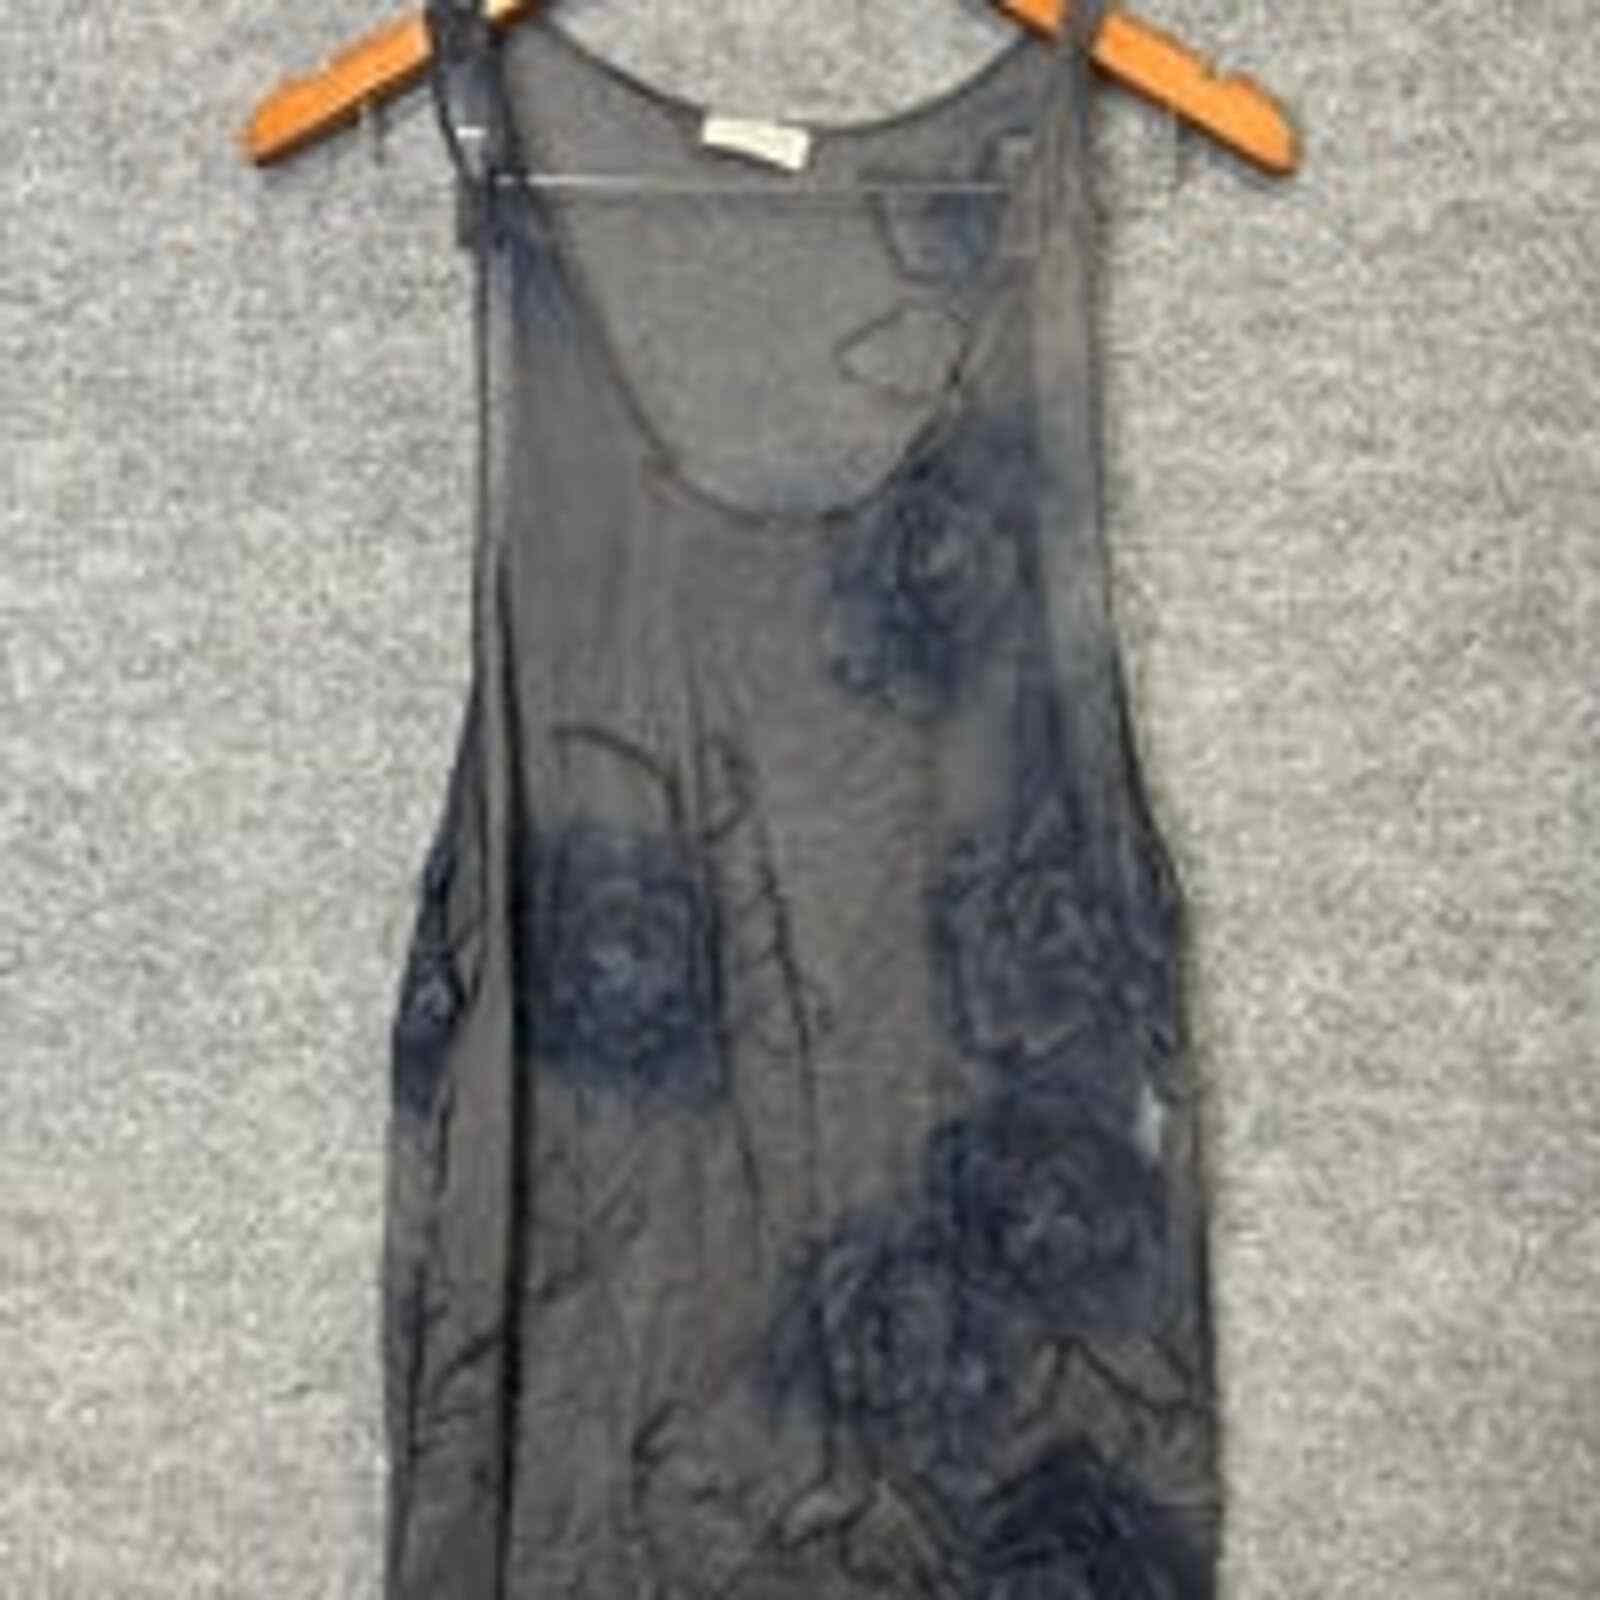 Dries Van Noten silk mesh black floral tank top size large